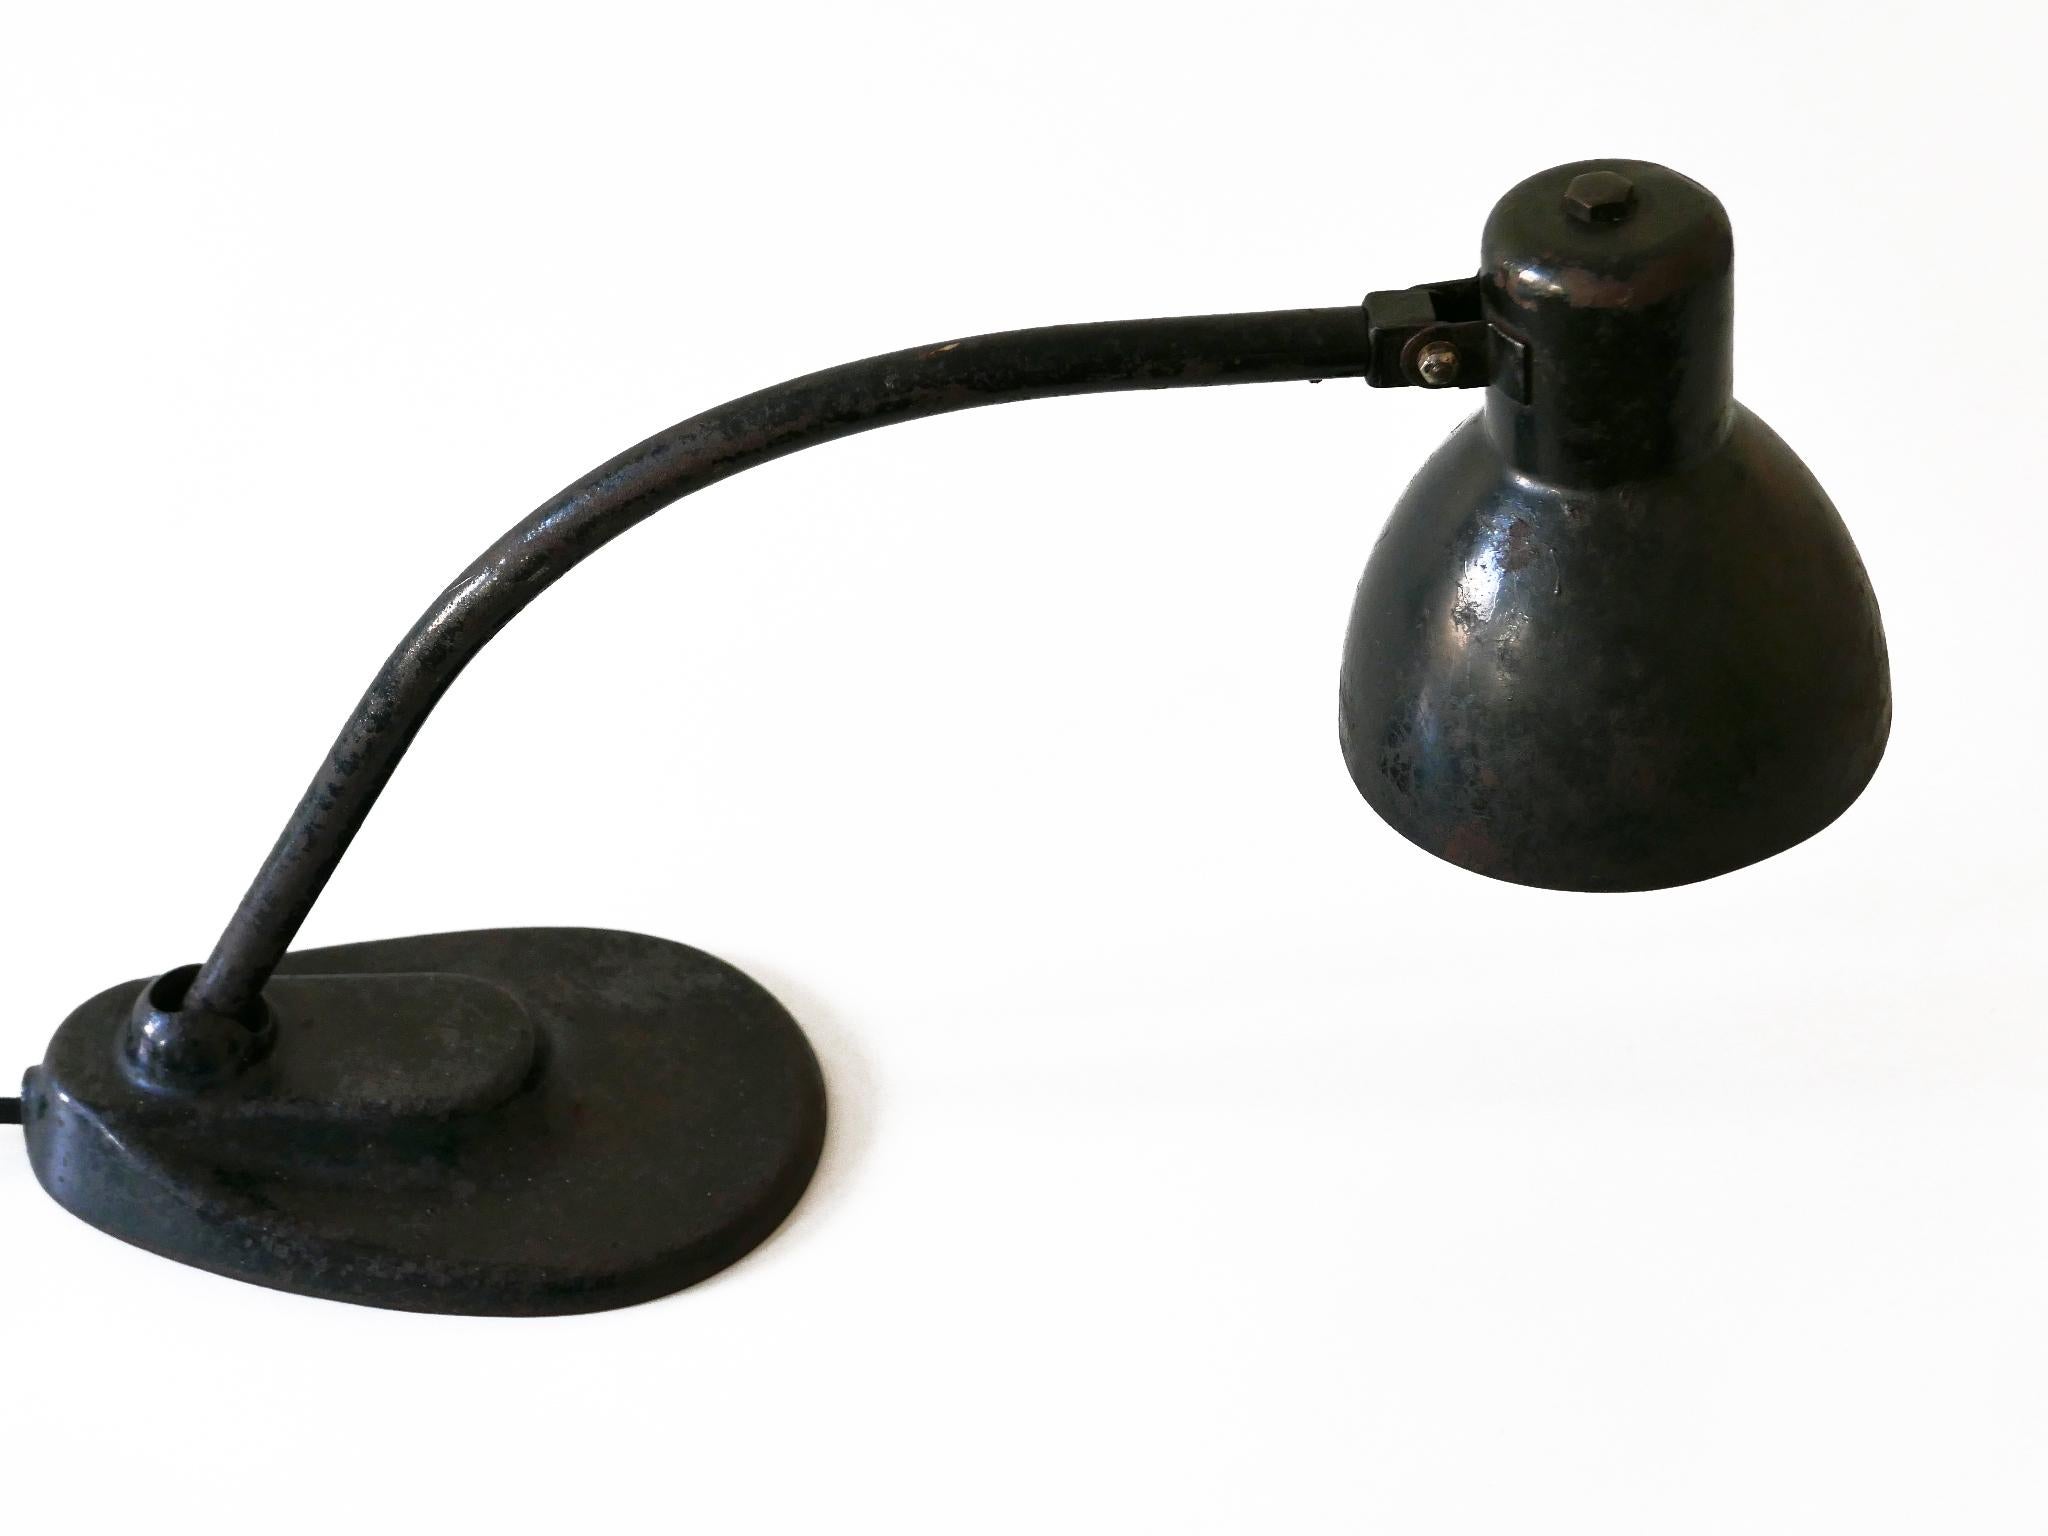 Enameled Bauhaus Table Lamp '967' by Marianne Brandt & Hin Bredendieck for Kandem, 1930s For Sale